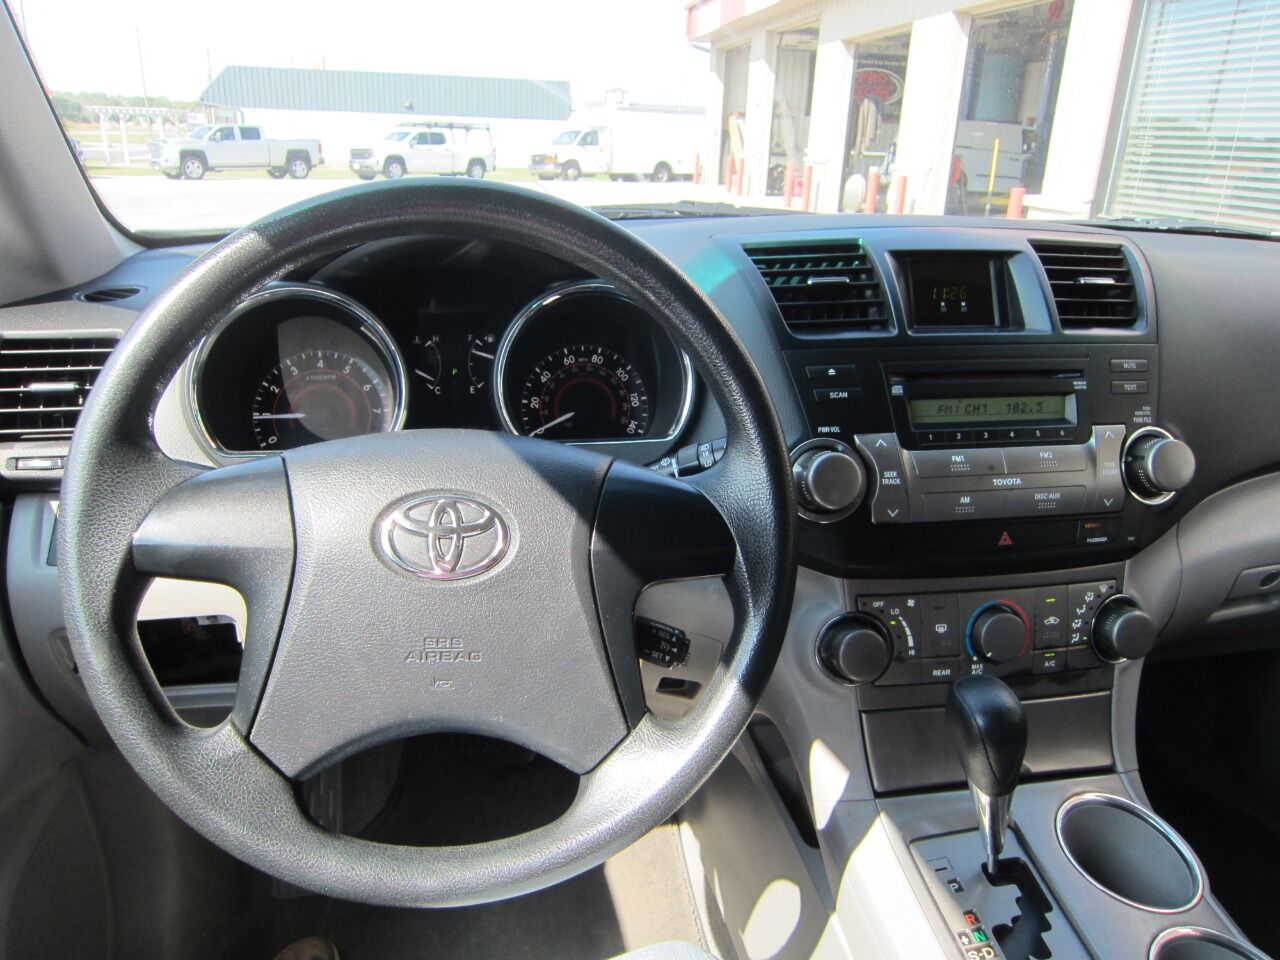 2008 Toyota Highlander